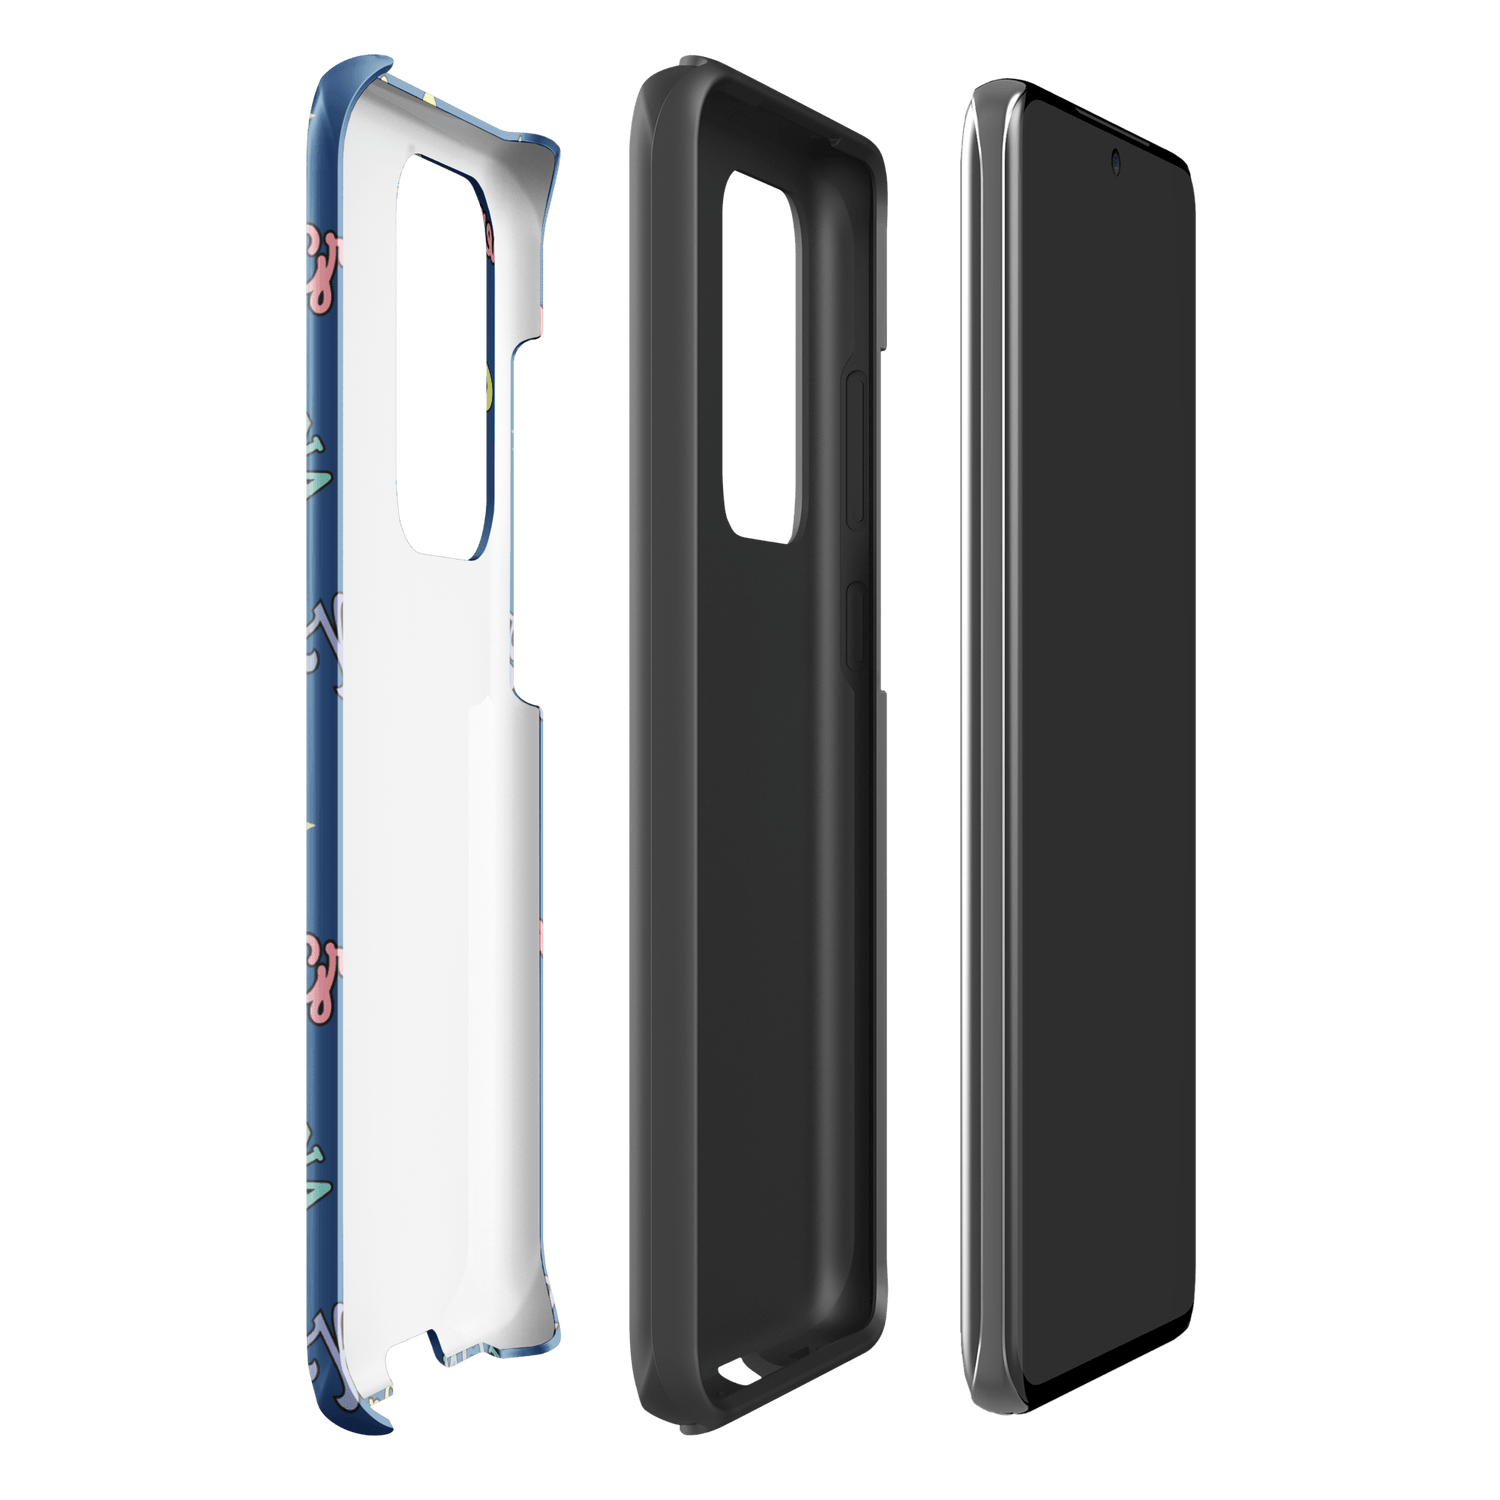 Mean Girls The Plastics Tough Phone Case - Samsung - Paramount Shop